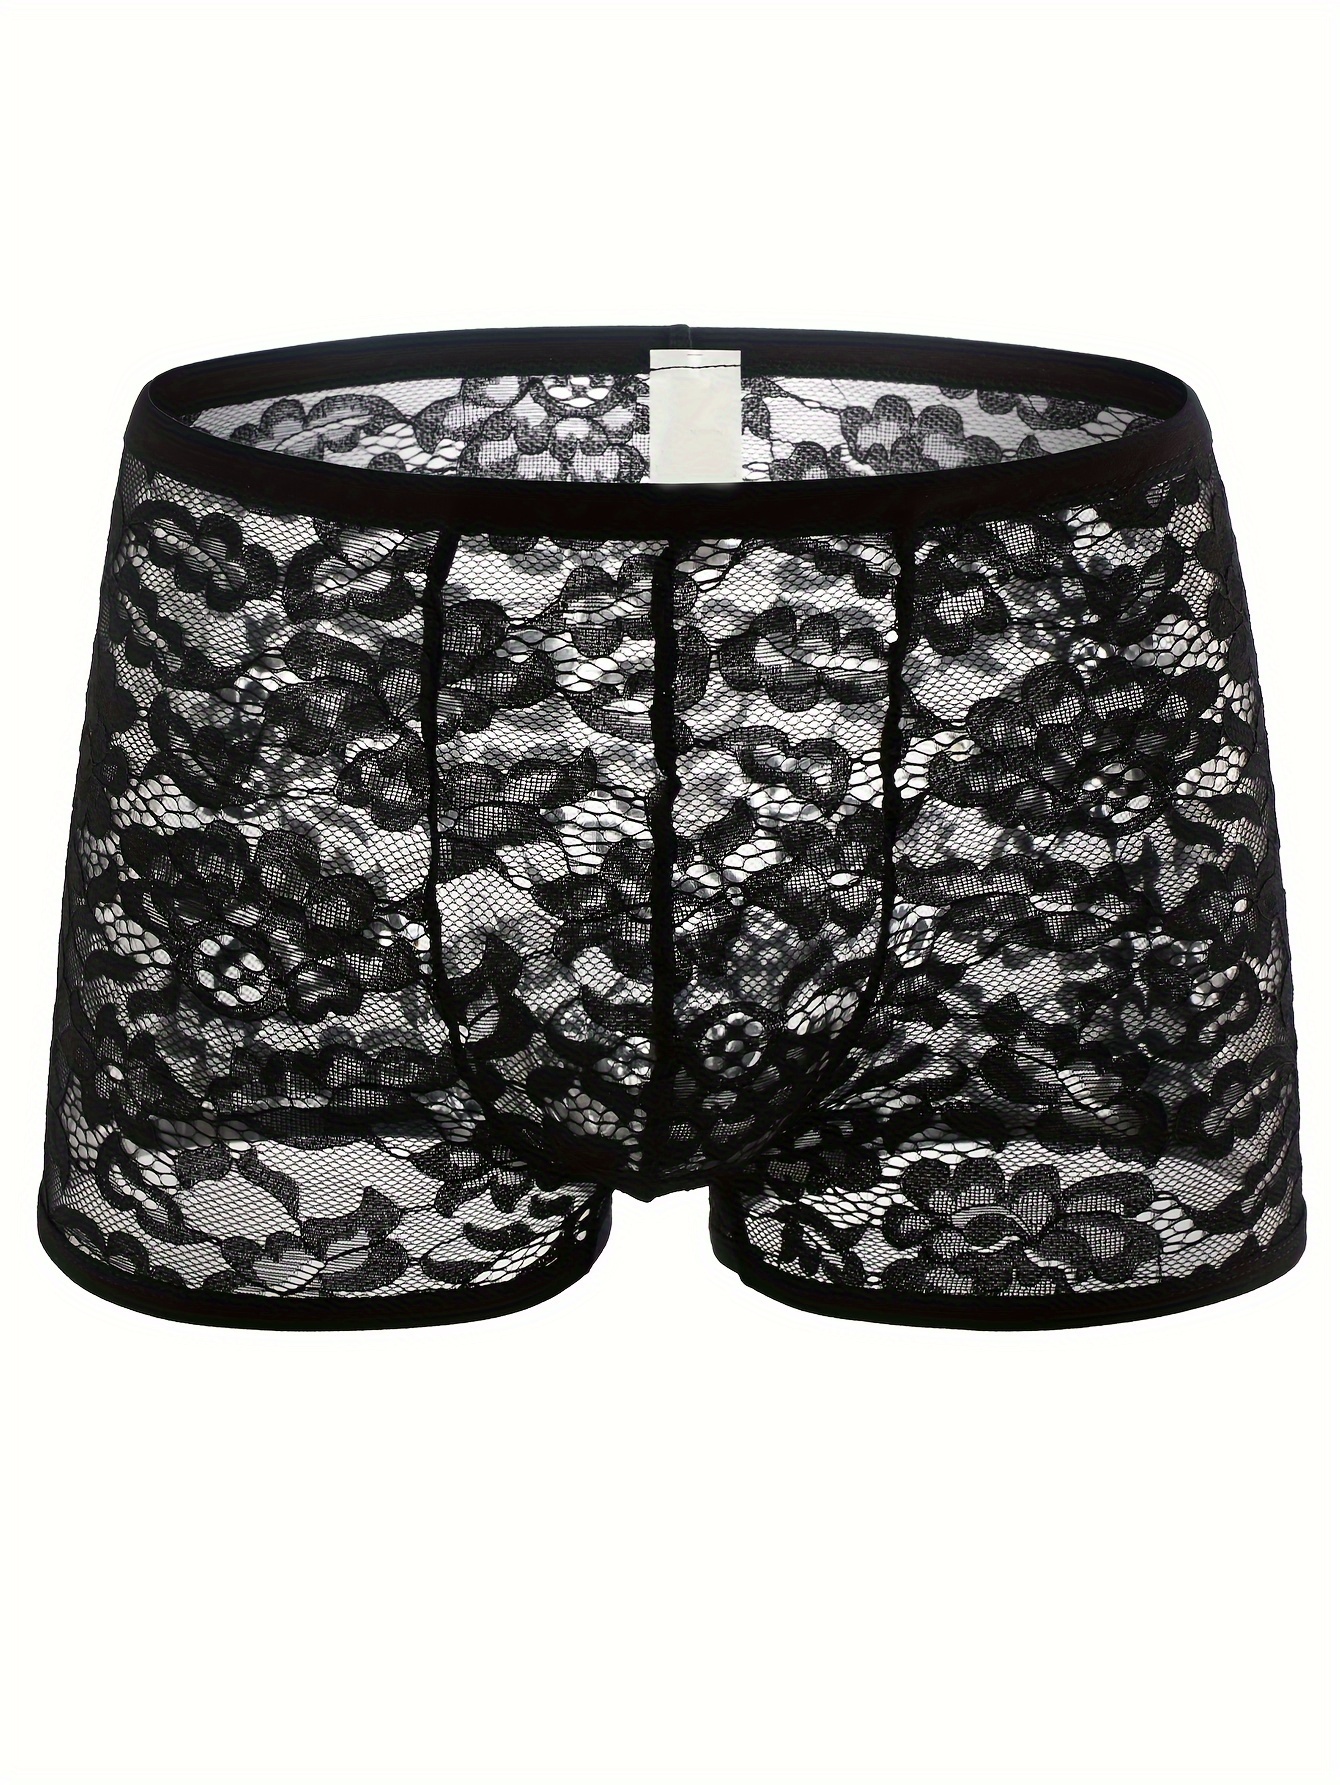 Men\'s Brief Underwear All Season Briefs Casual Cotton Crotchless Cute